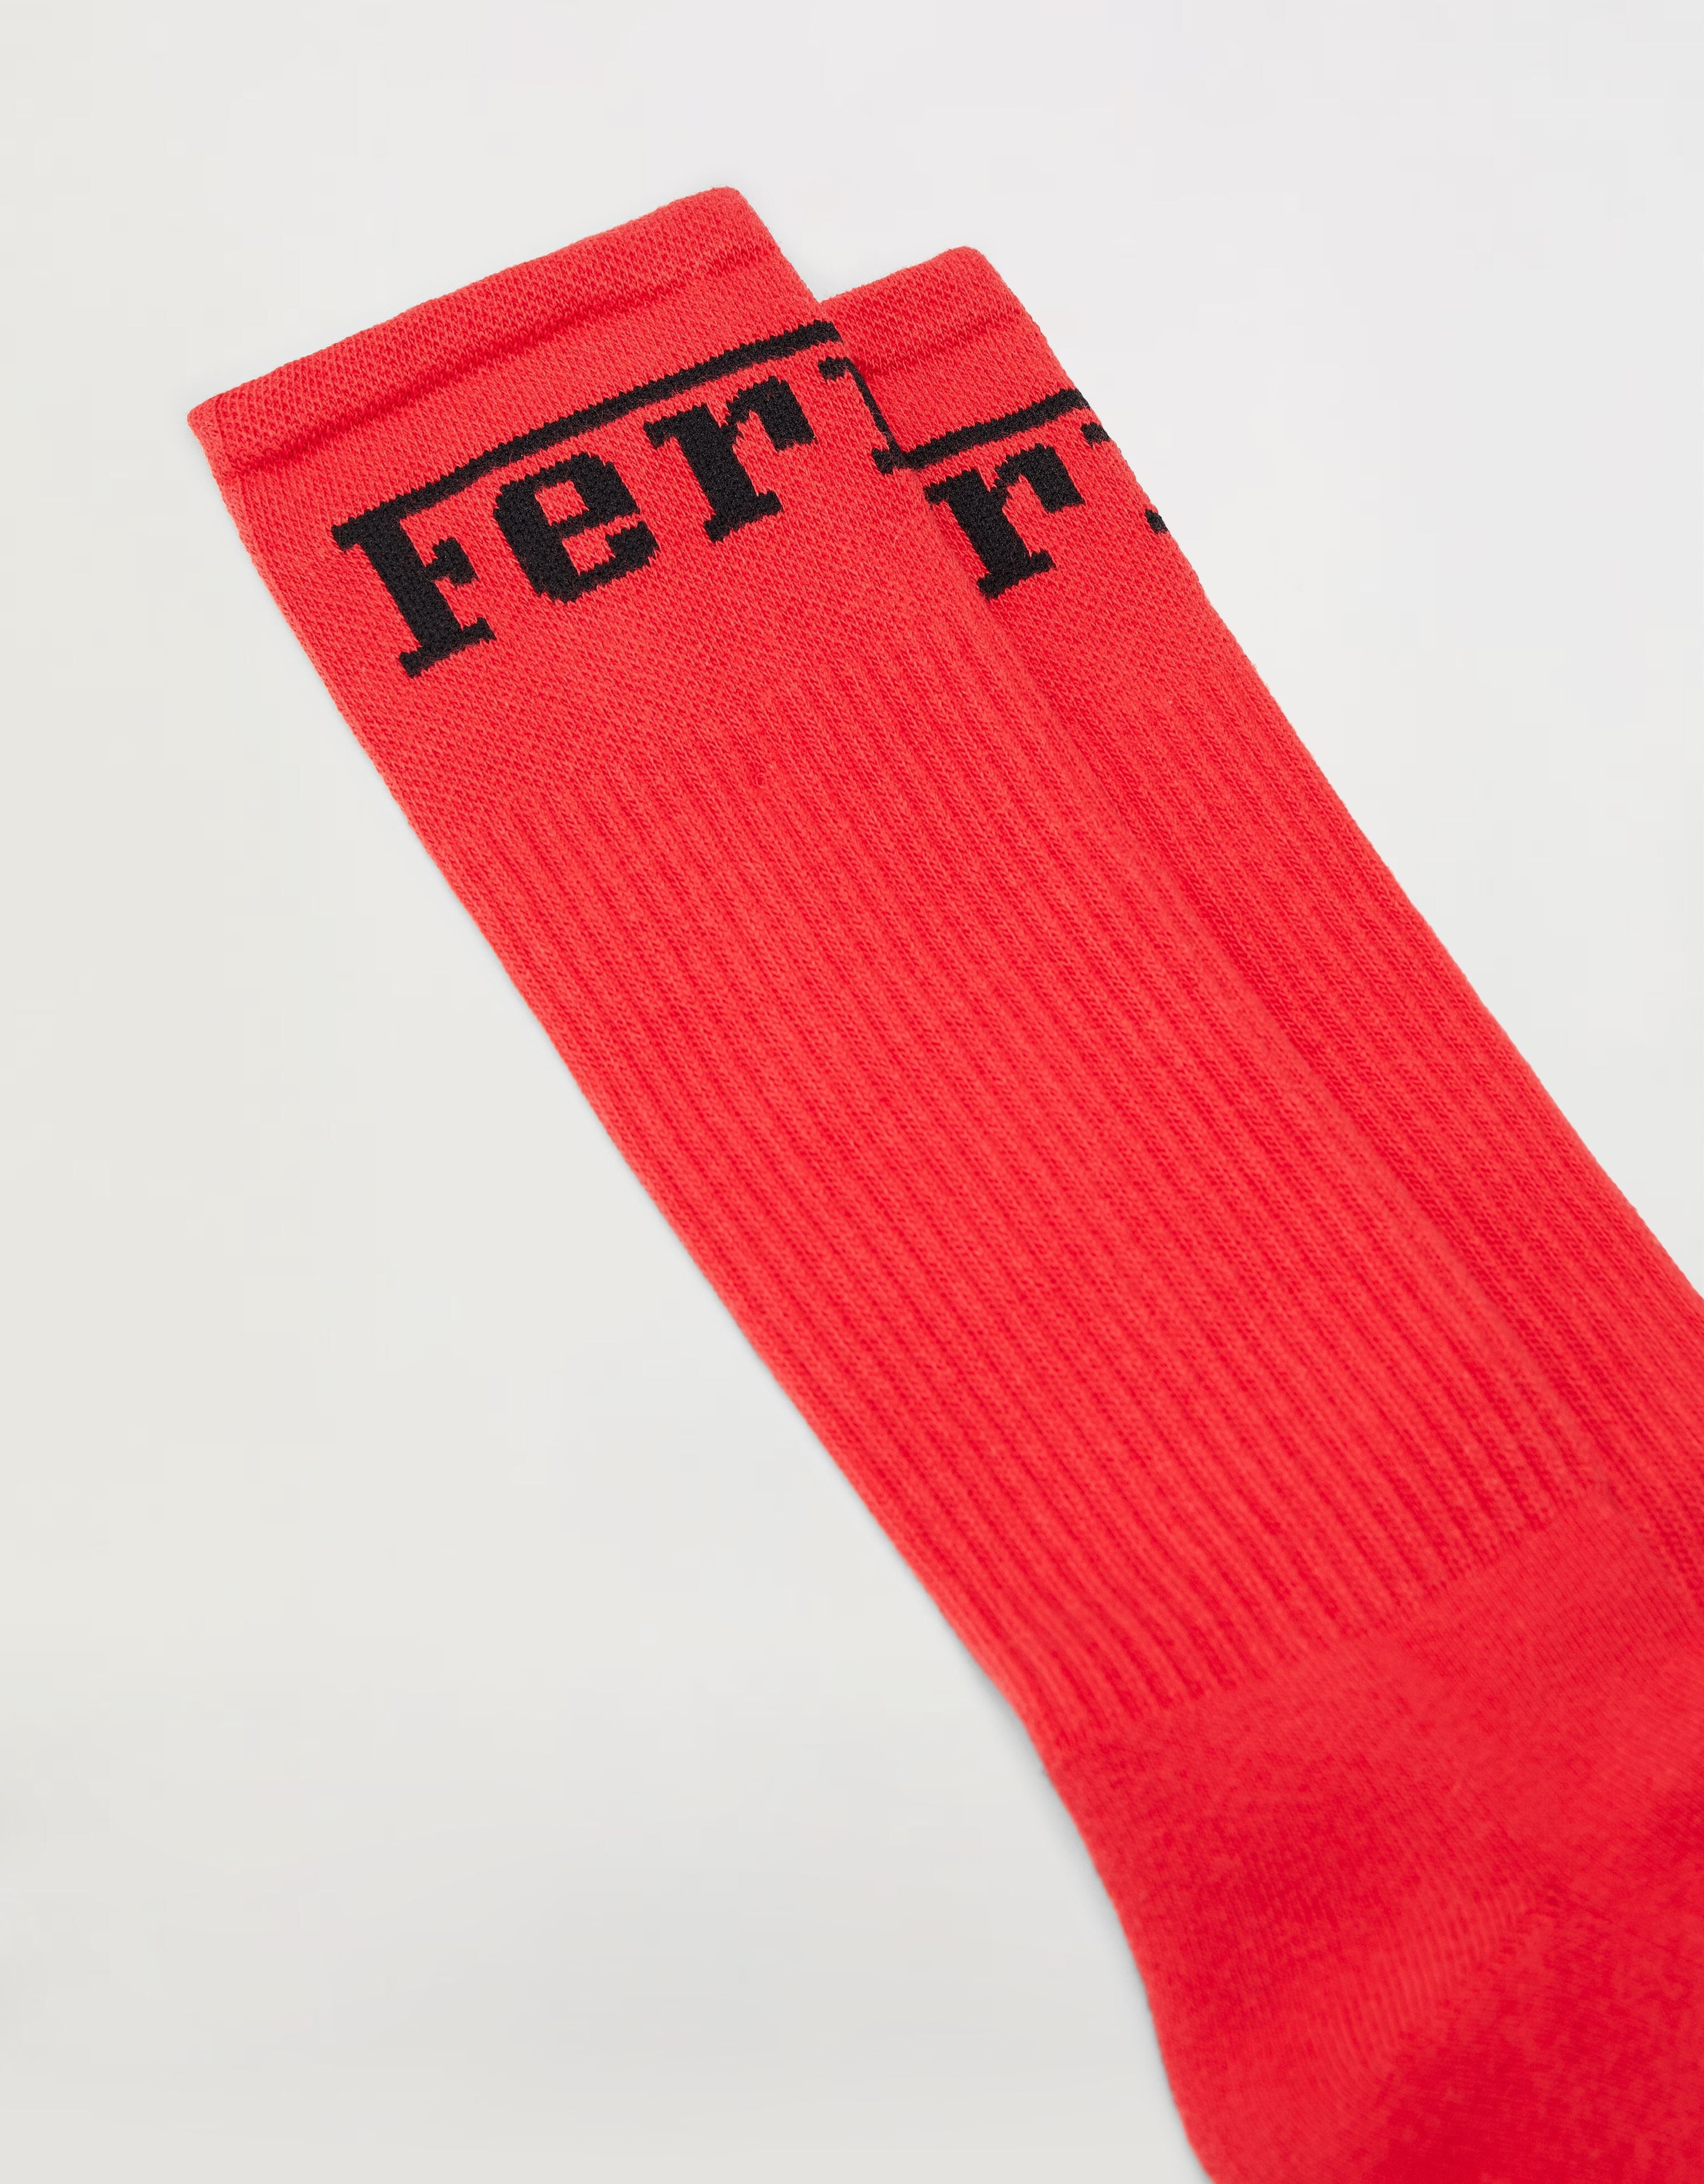 Ferrari Socken aus Baumwollmischung mit Ferrari-Logo Rot 20007f